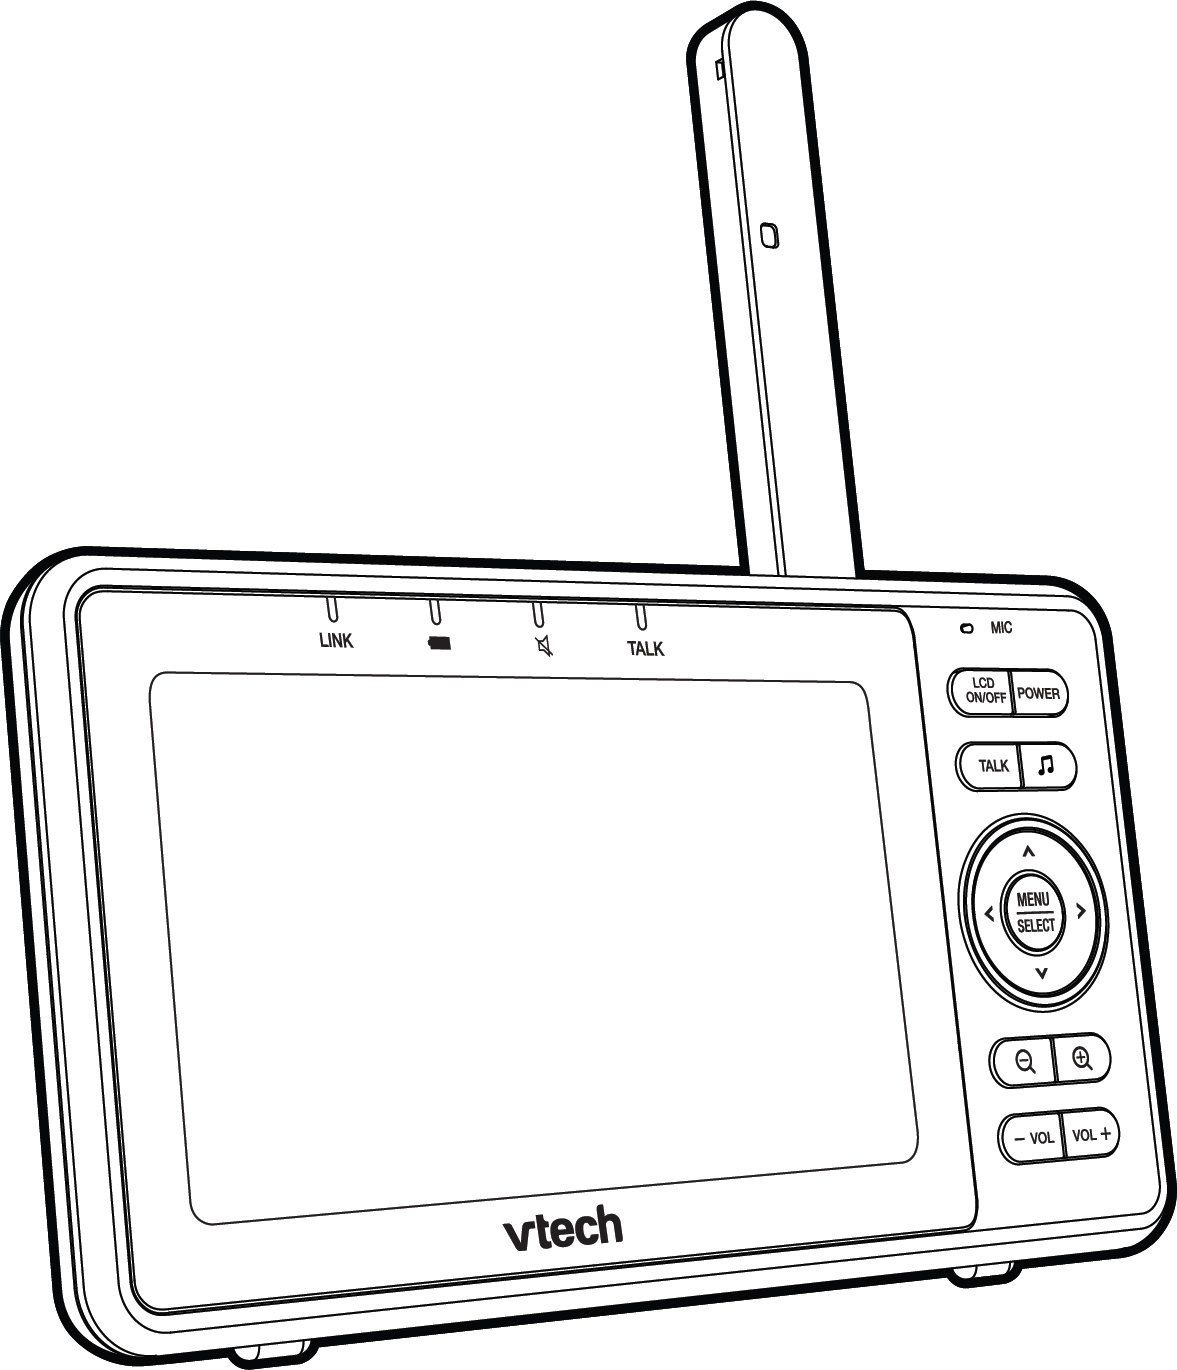 vtech wifi 1080p video monitor